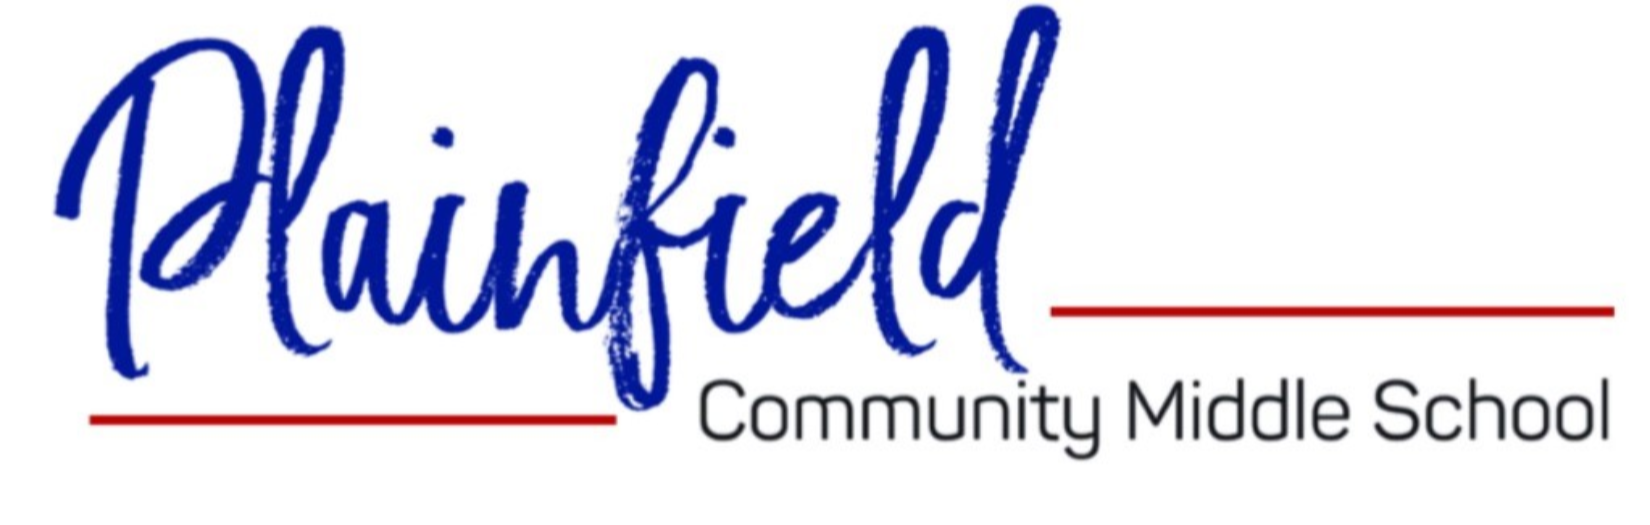 plainfield community middle school header